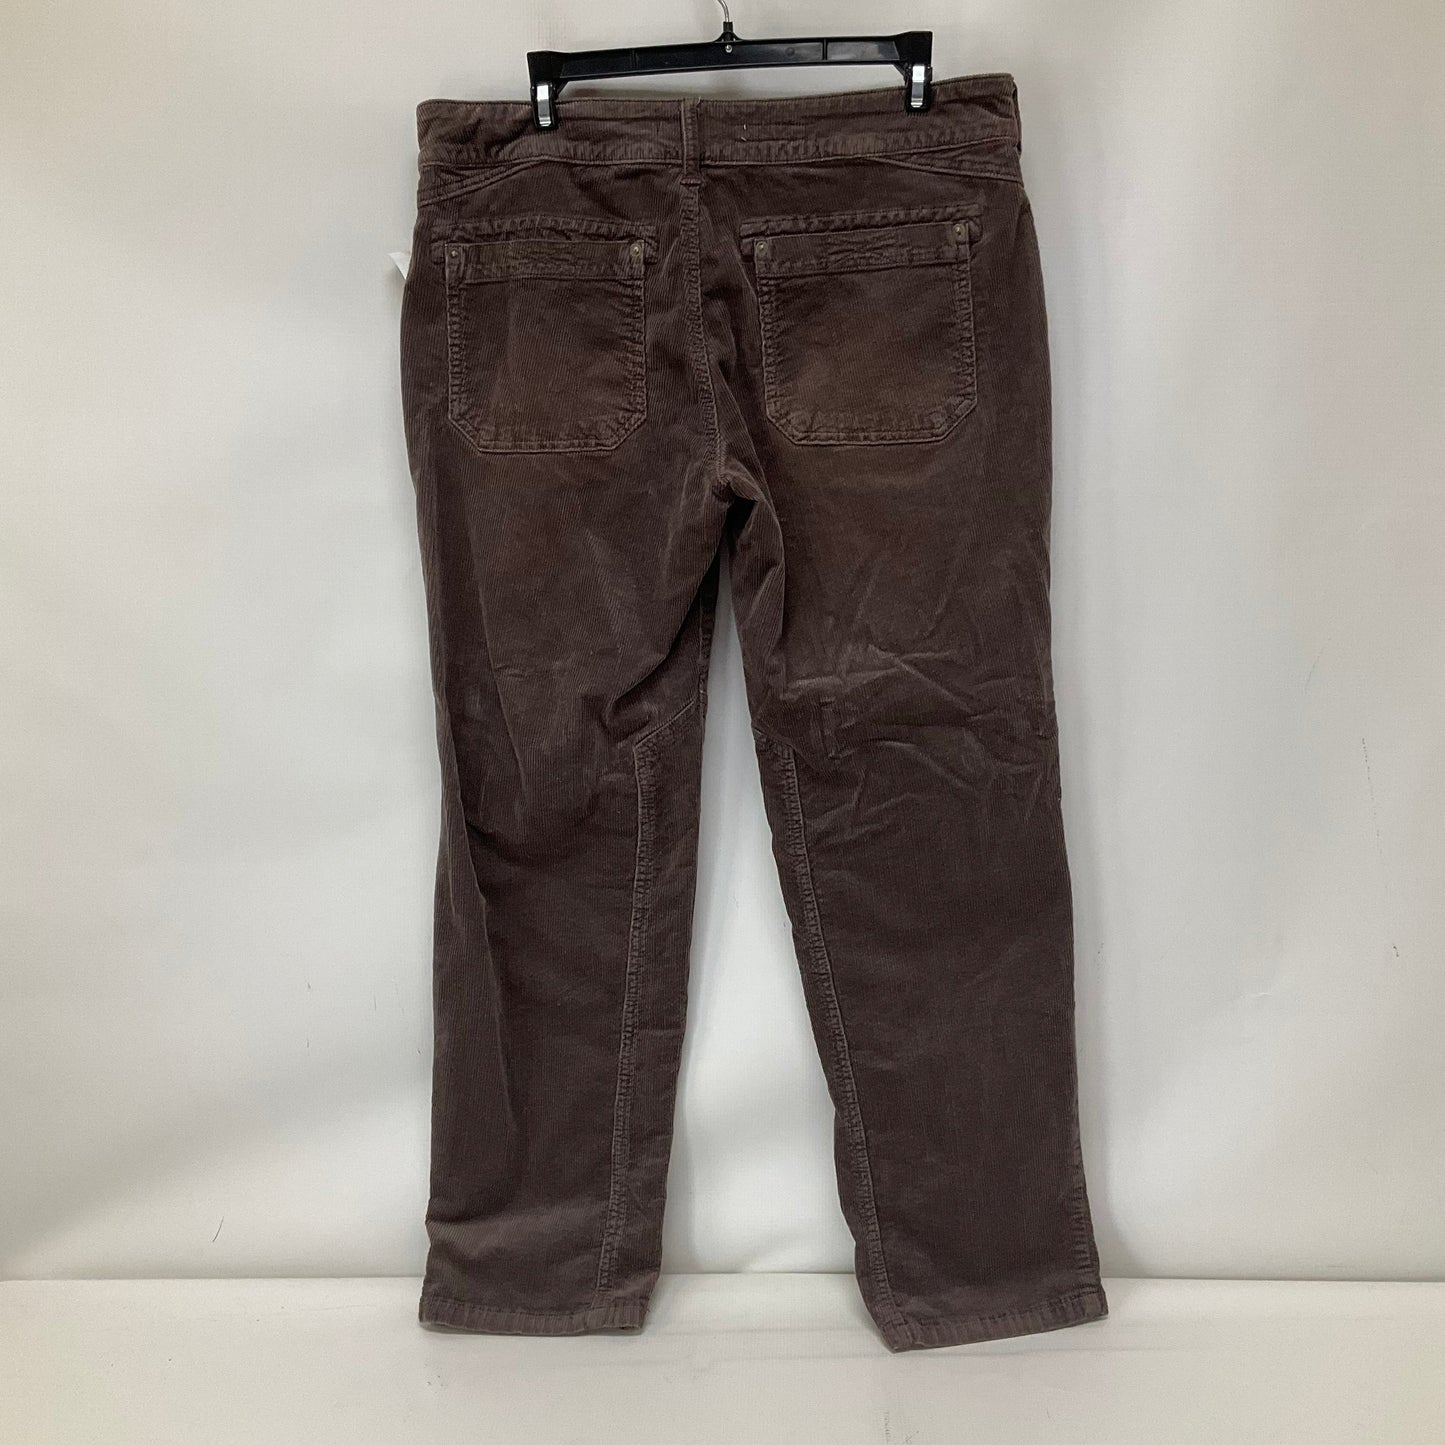 Pants Corduroy By Pilcro  Size: 10